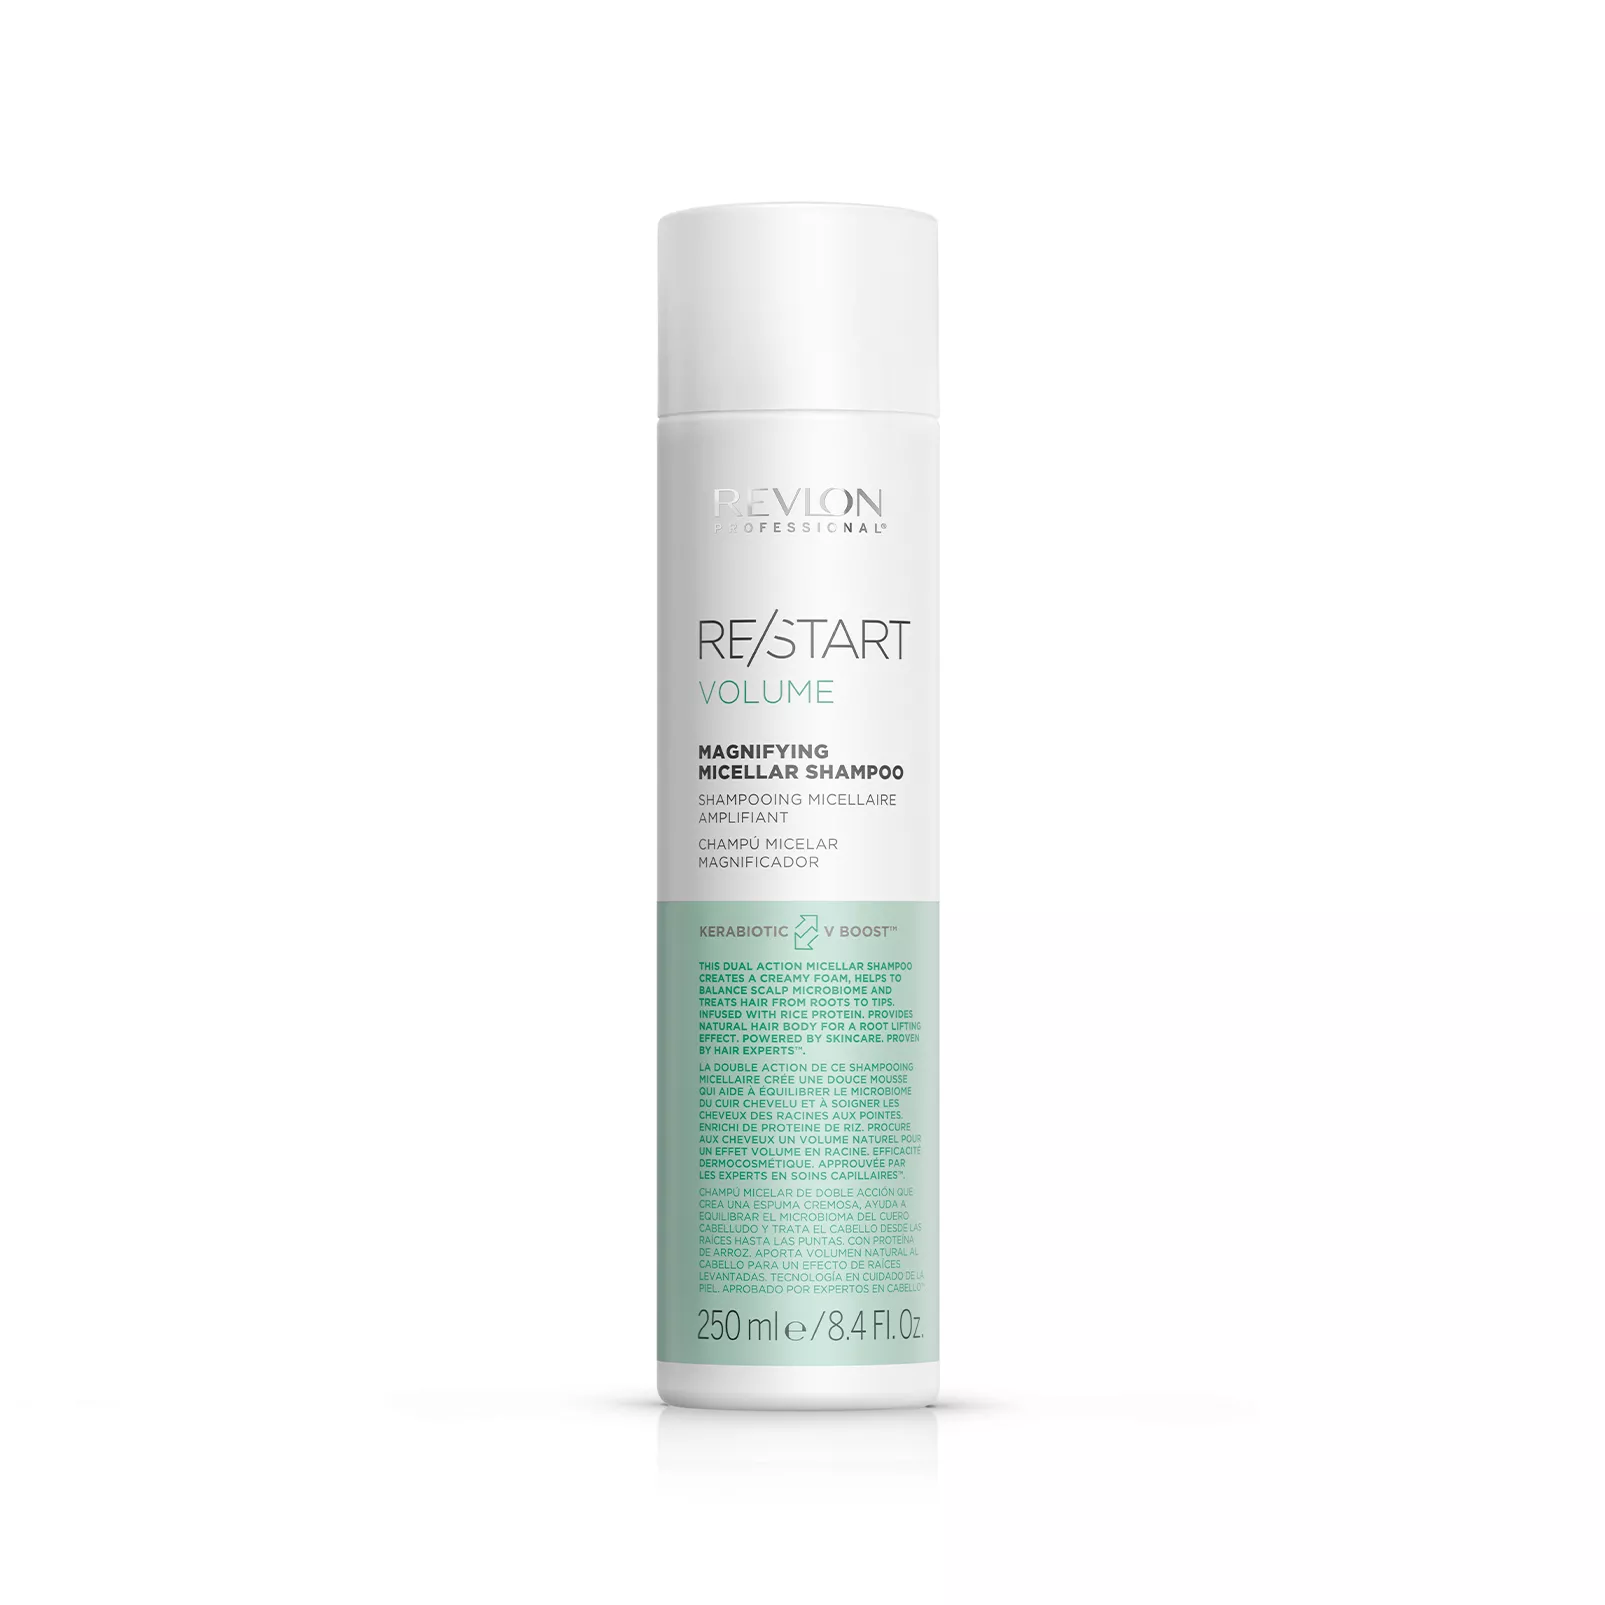 RE/START™ Volume Magnifying Micellar Shampoo Professional Revlon 